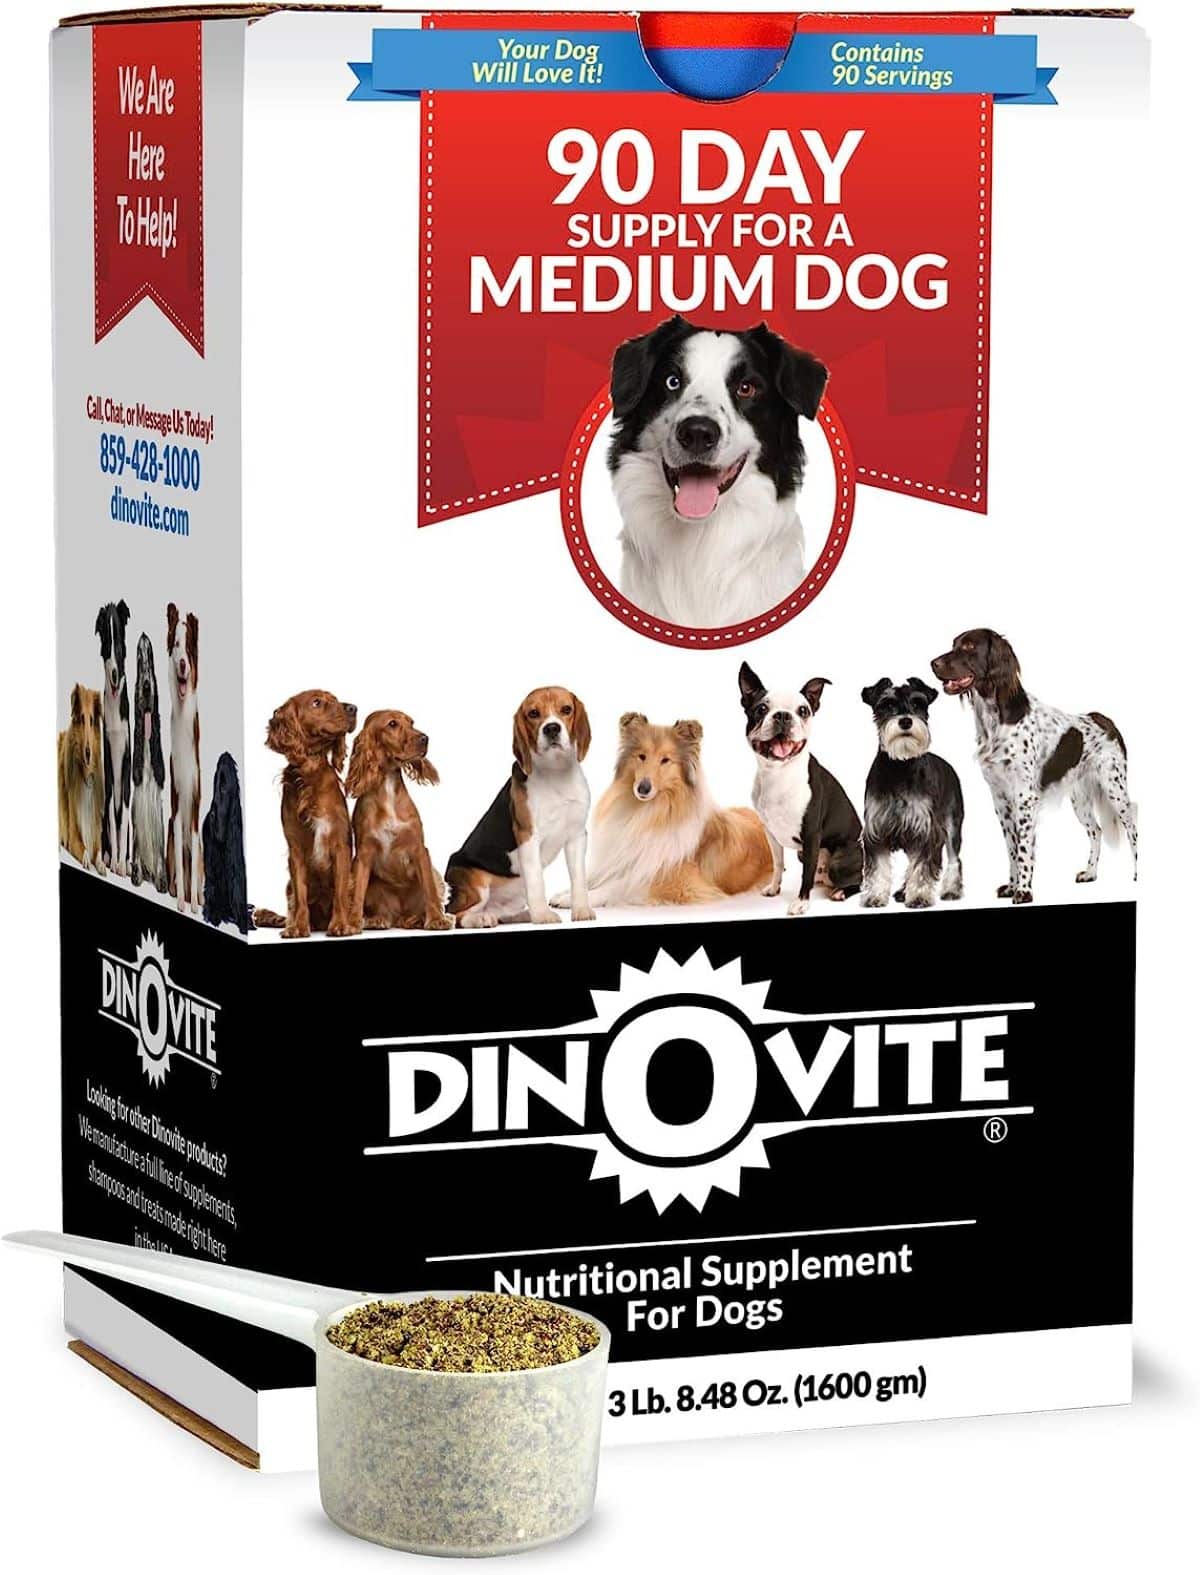 Dinovite Probiotic Supplement for Dogs